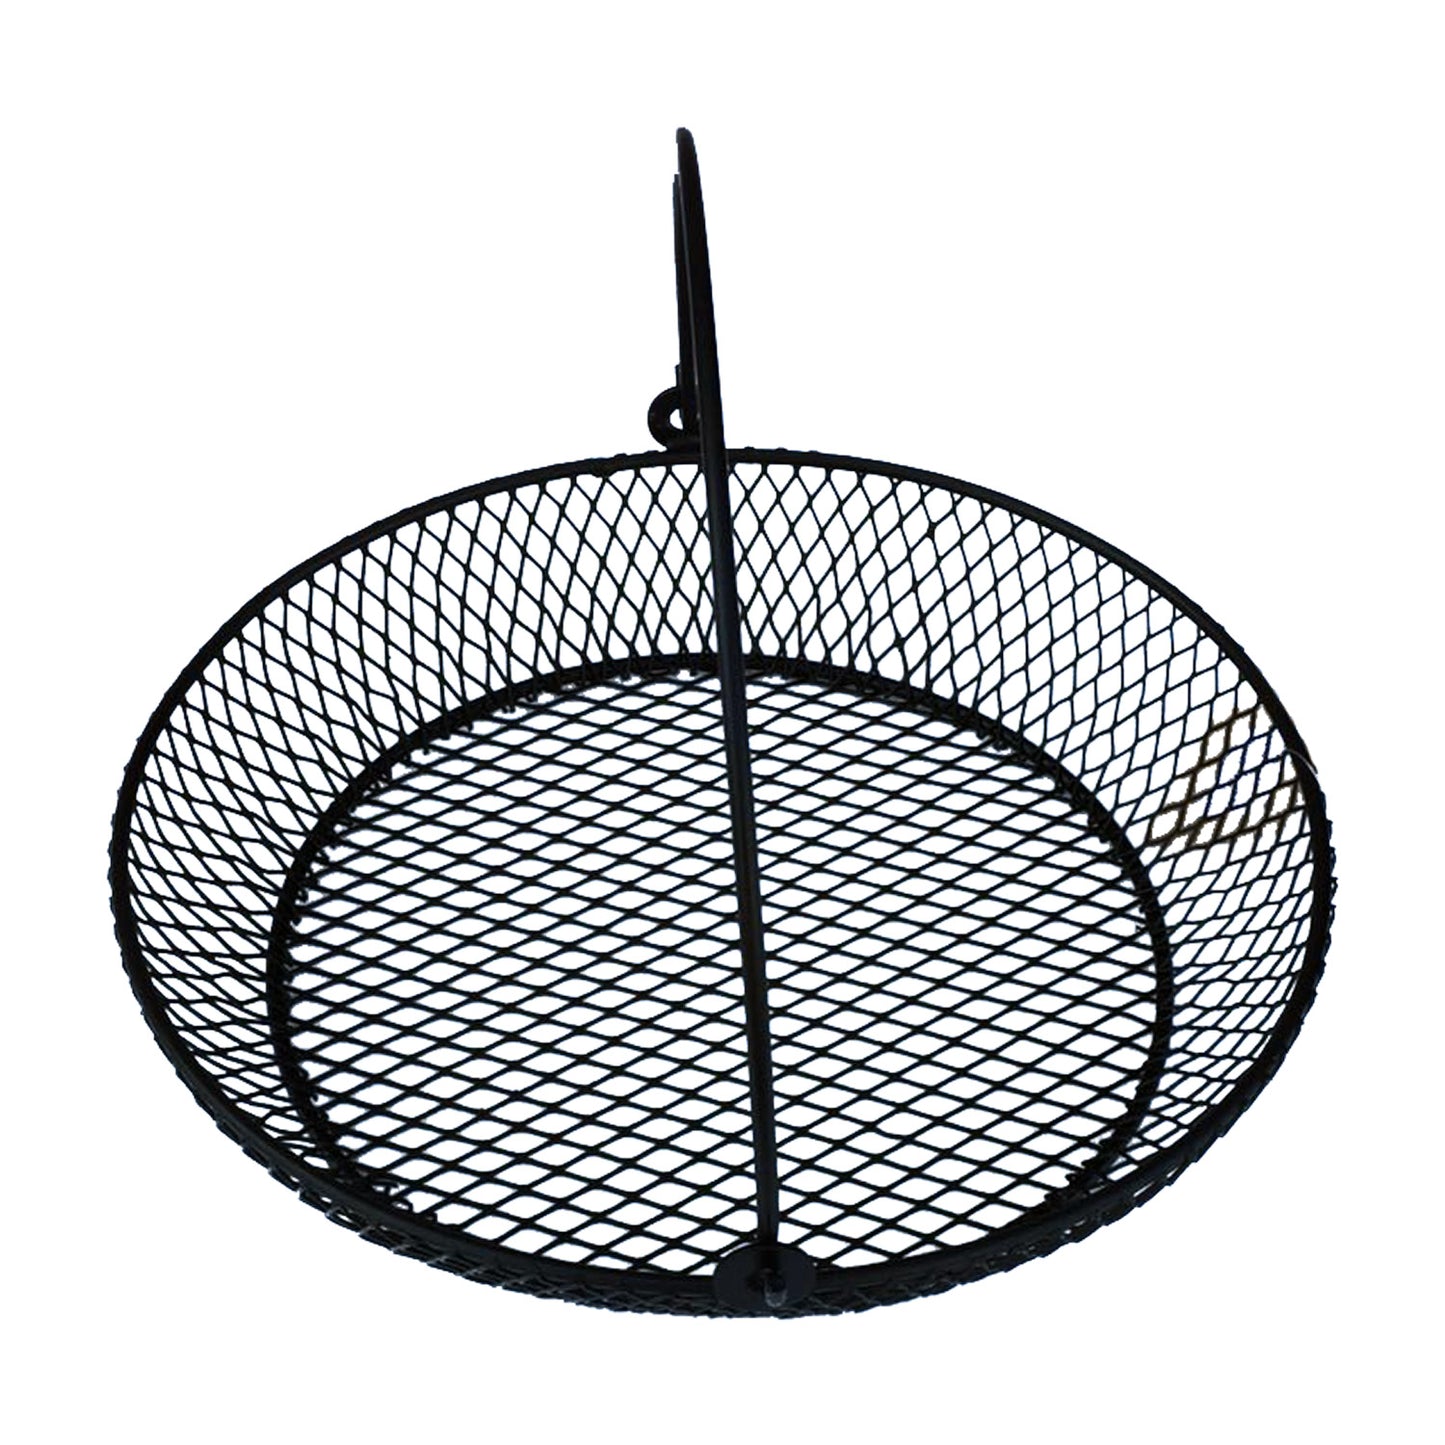 GiftBay 904 Wire Basket Black 10.5"x10.5"x2.5" High